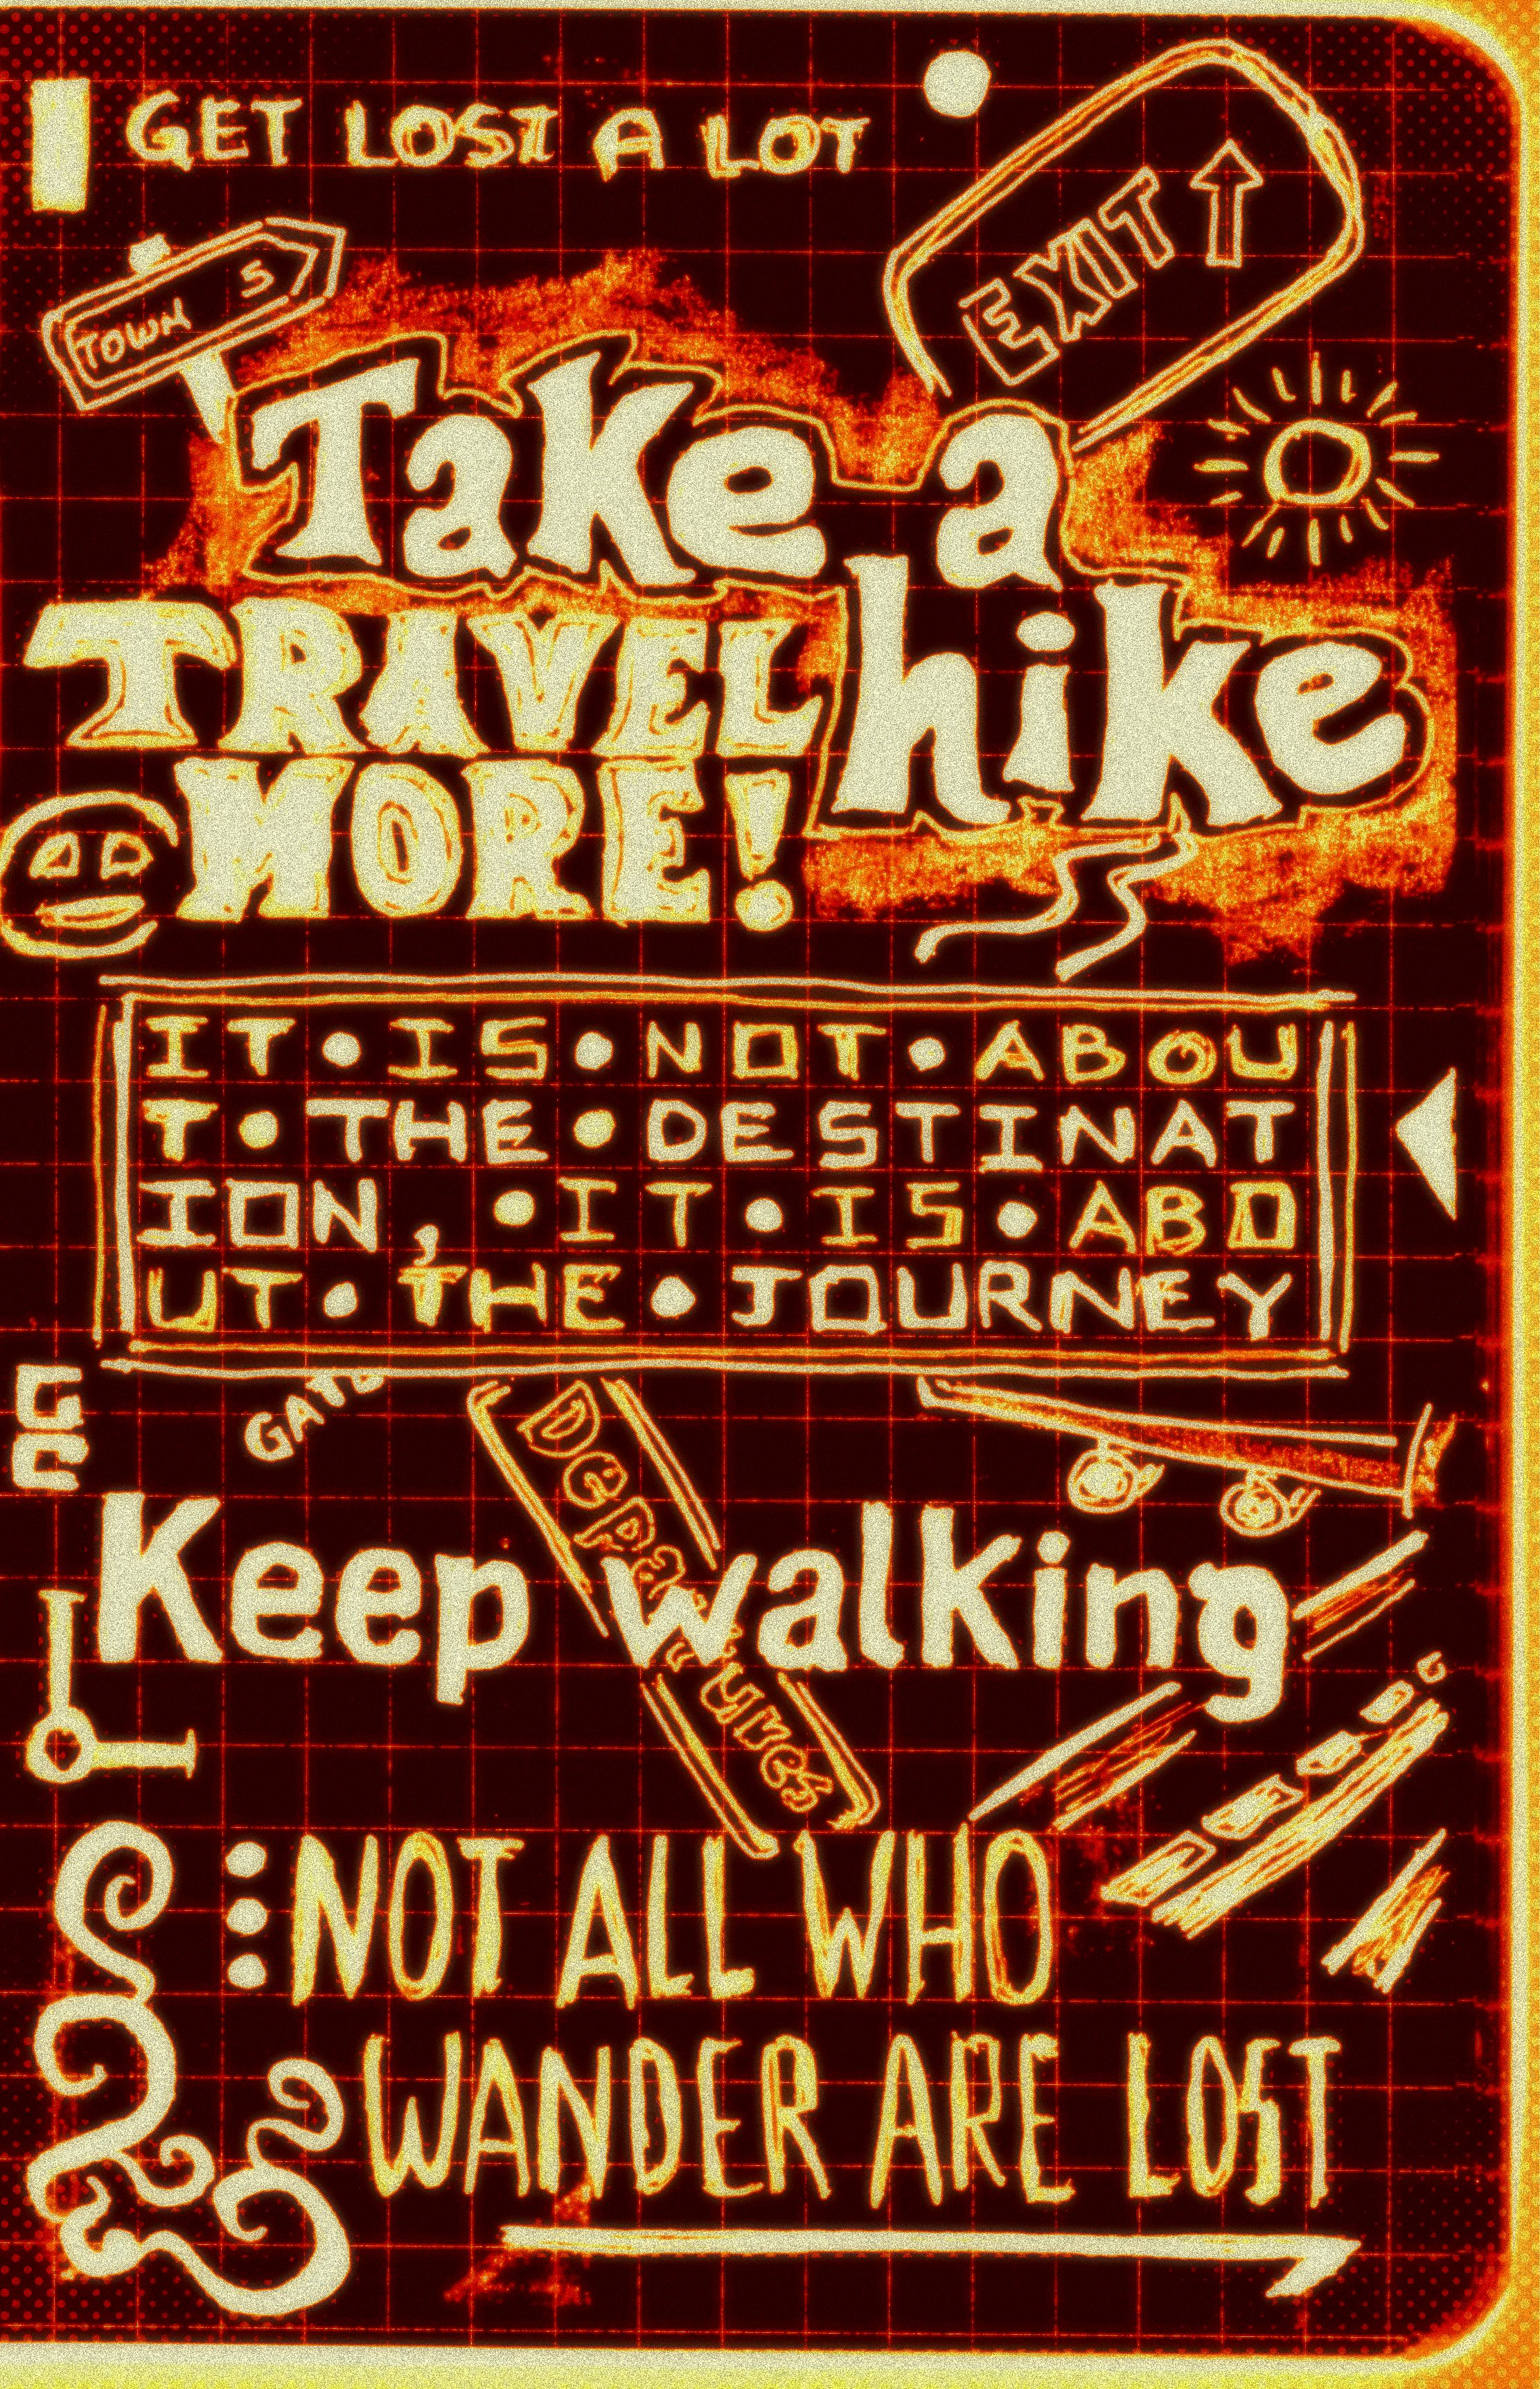 take a hike